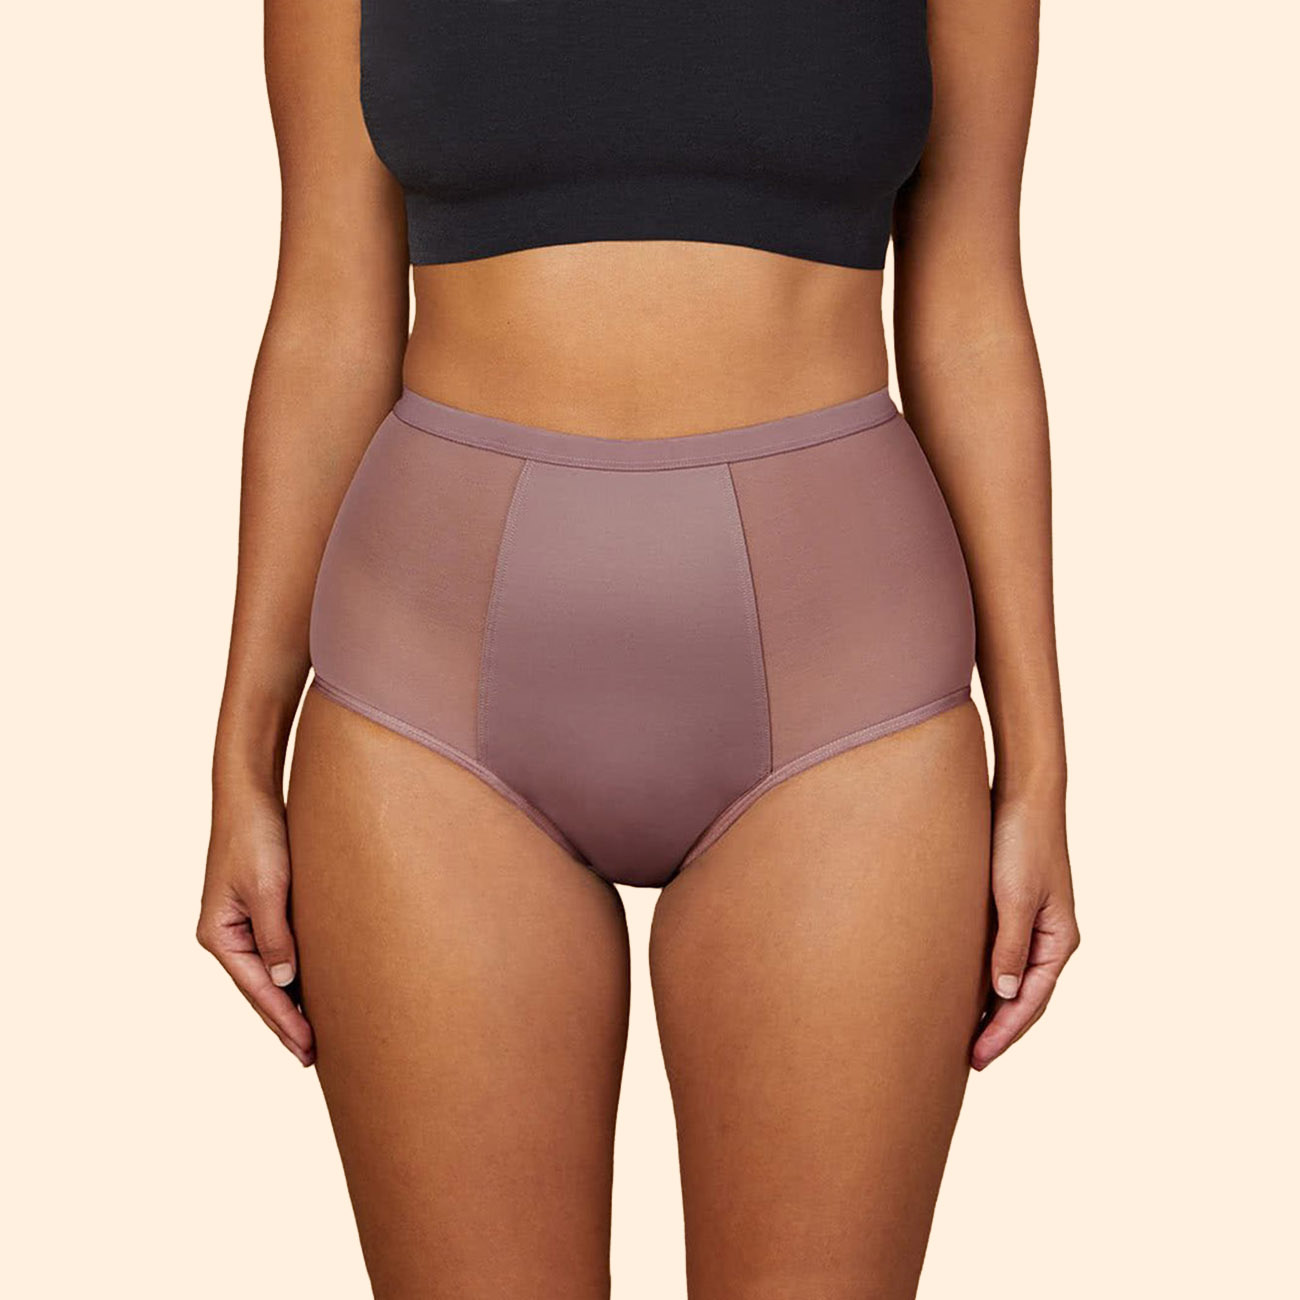 THINX Period Underwear Panties Cheeky Sz Large - Dusk Lavender NEW